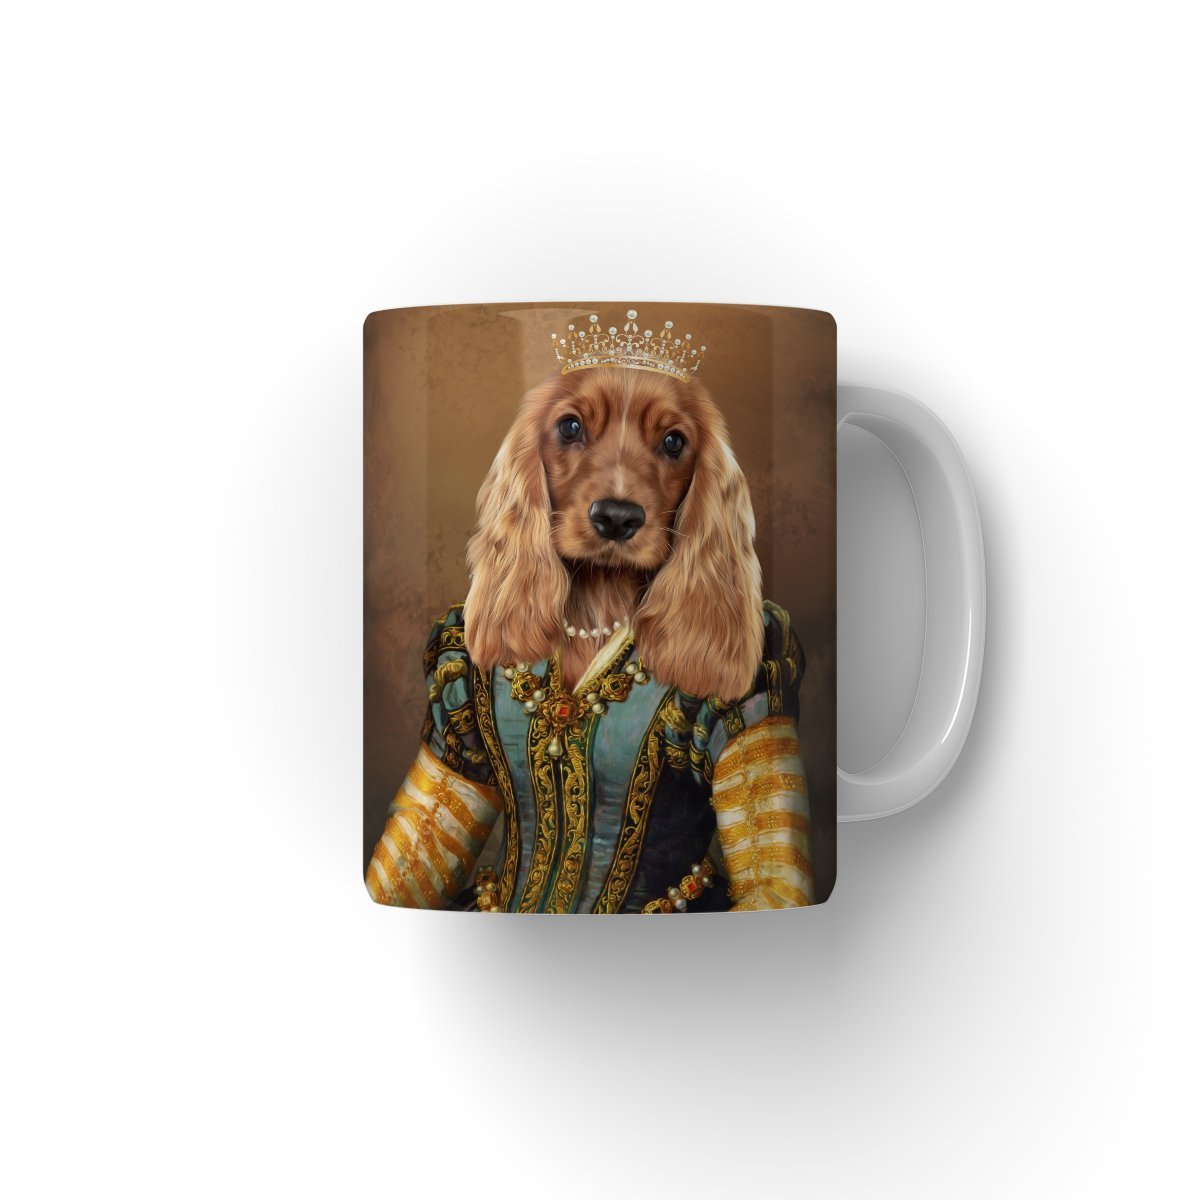 The Pearl Princess: Custom Pet Mug - Paw & Glory - #pet portraits# - #dog portraits# - #pet portraits uk#paw & glory, custom pet portrait Mug,pet picture mug, put your pet on a mug, print mugs, dog travel mug, mugs with pet pictures